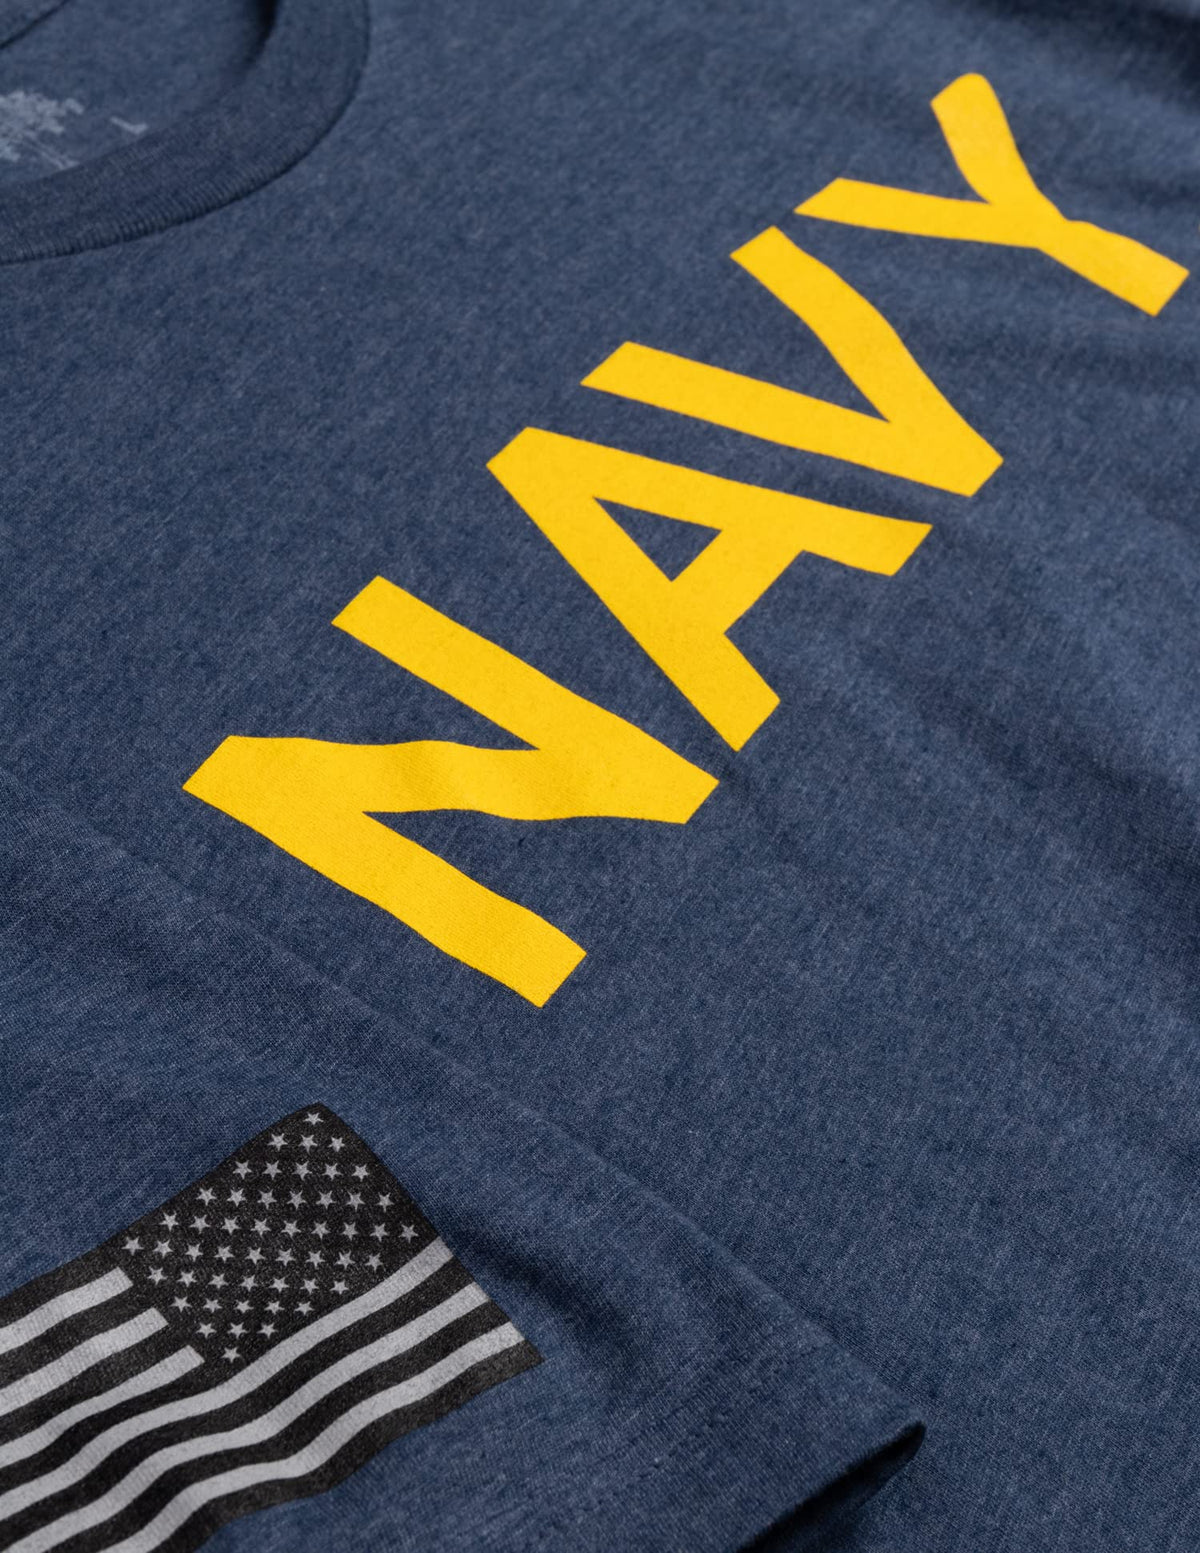 USS Klakring, FFG-42 | U.S. Navy Sailor Veteran USN United States Naval T-shirt for Men Women